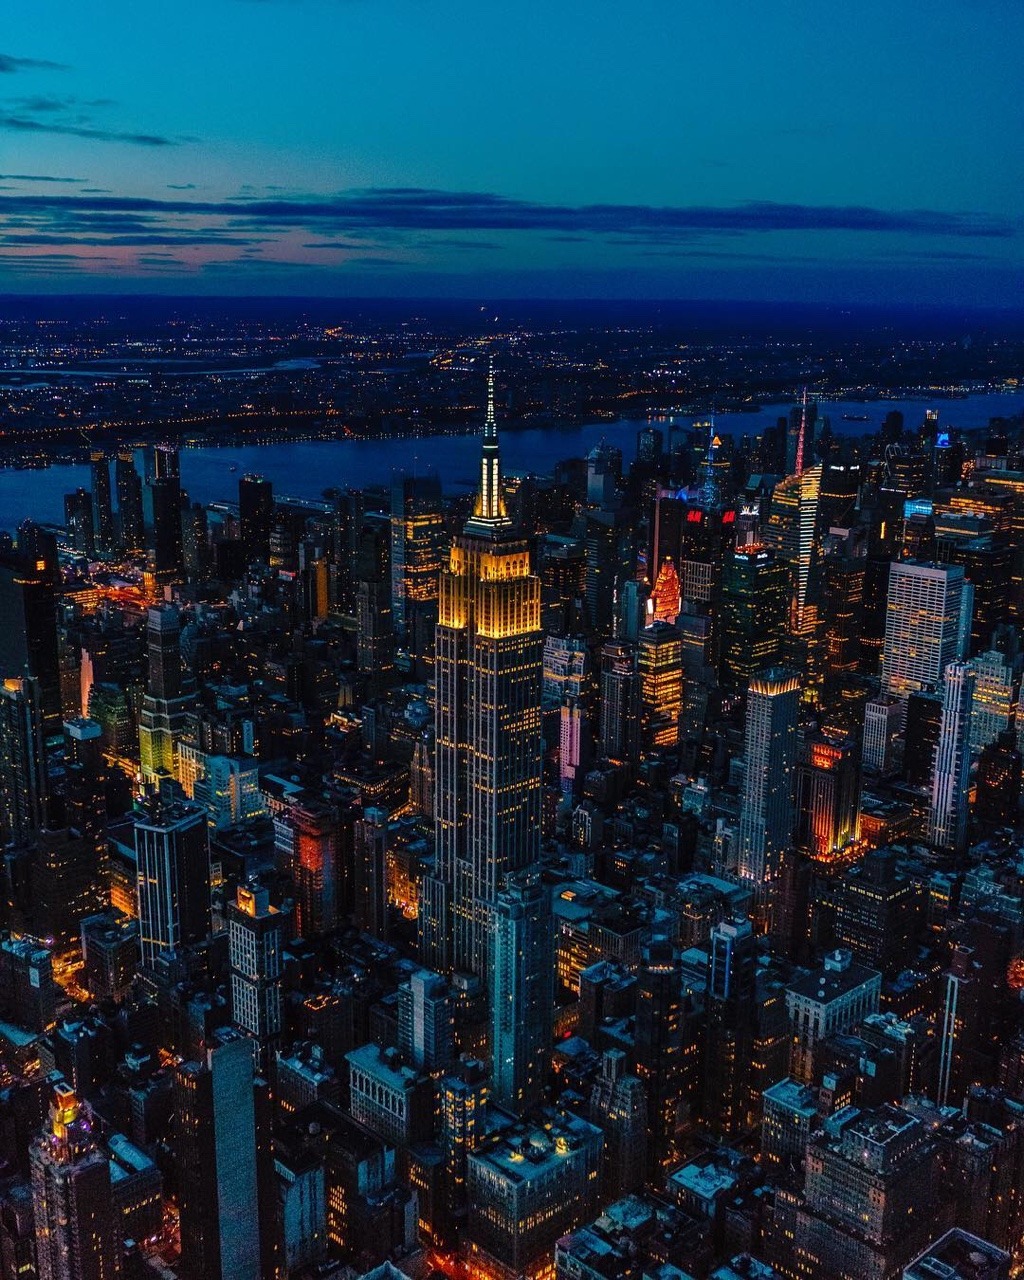 Midtown Manhattan at night by Chris Terranova